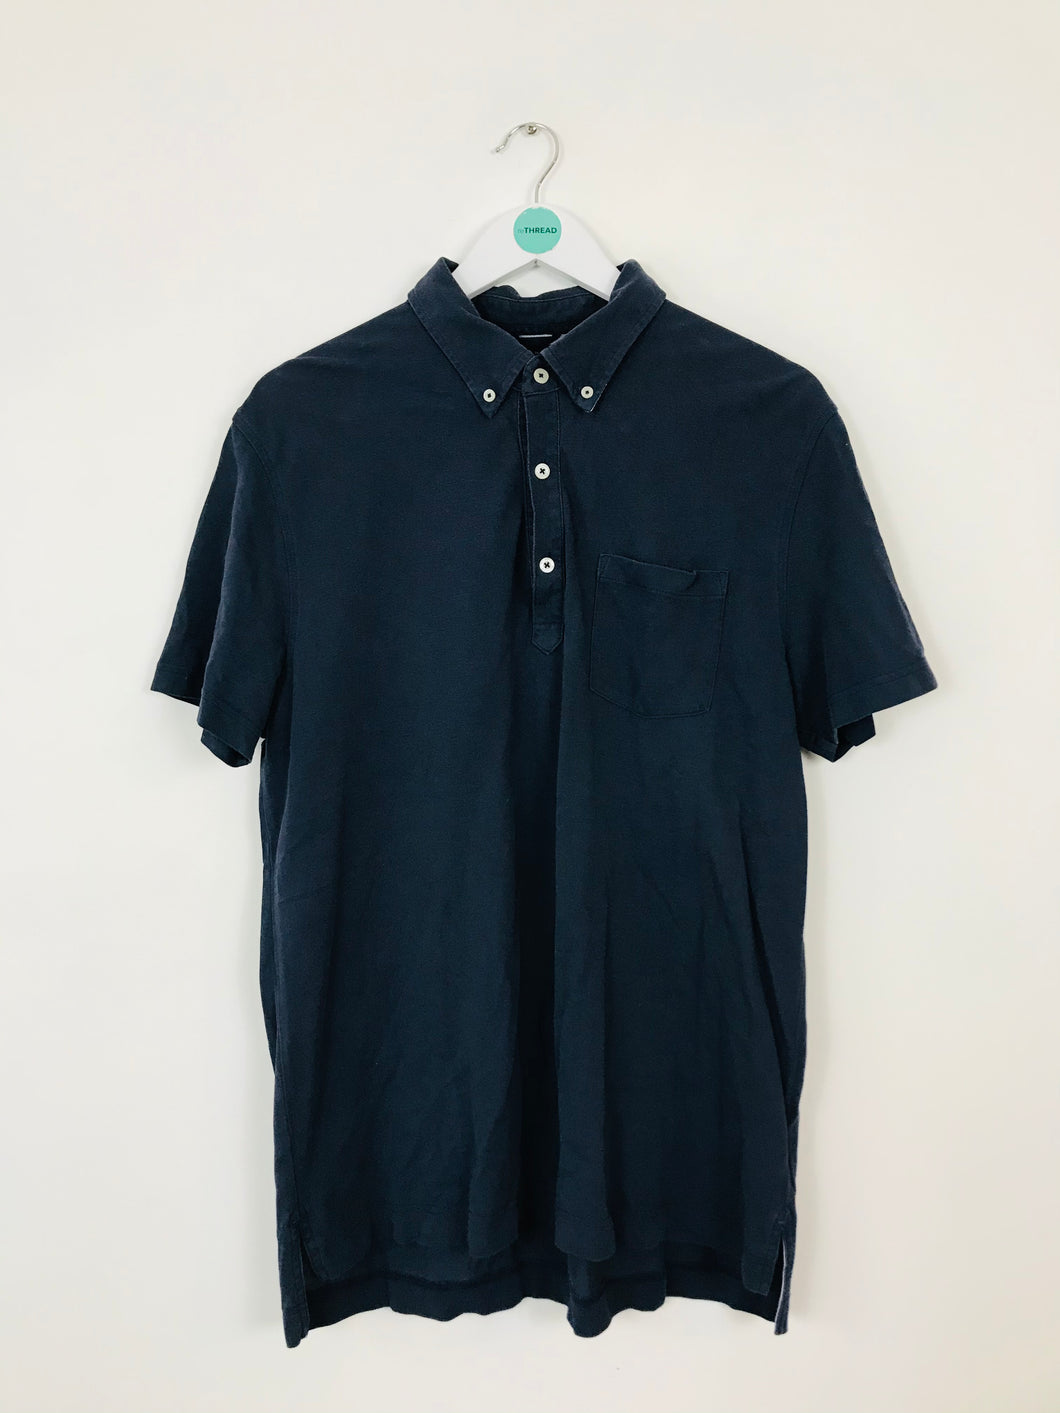 Tommy Hilfiger Men’s Polo Short Sleeve Top | L | Navy Blue